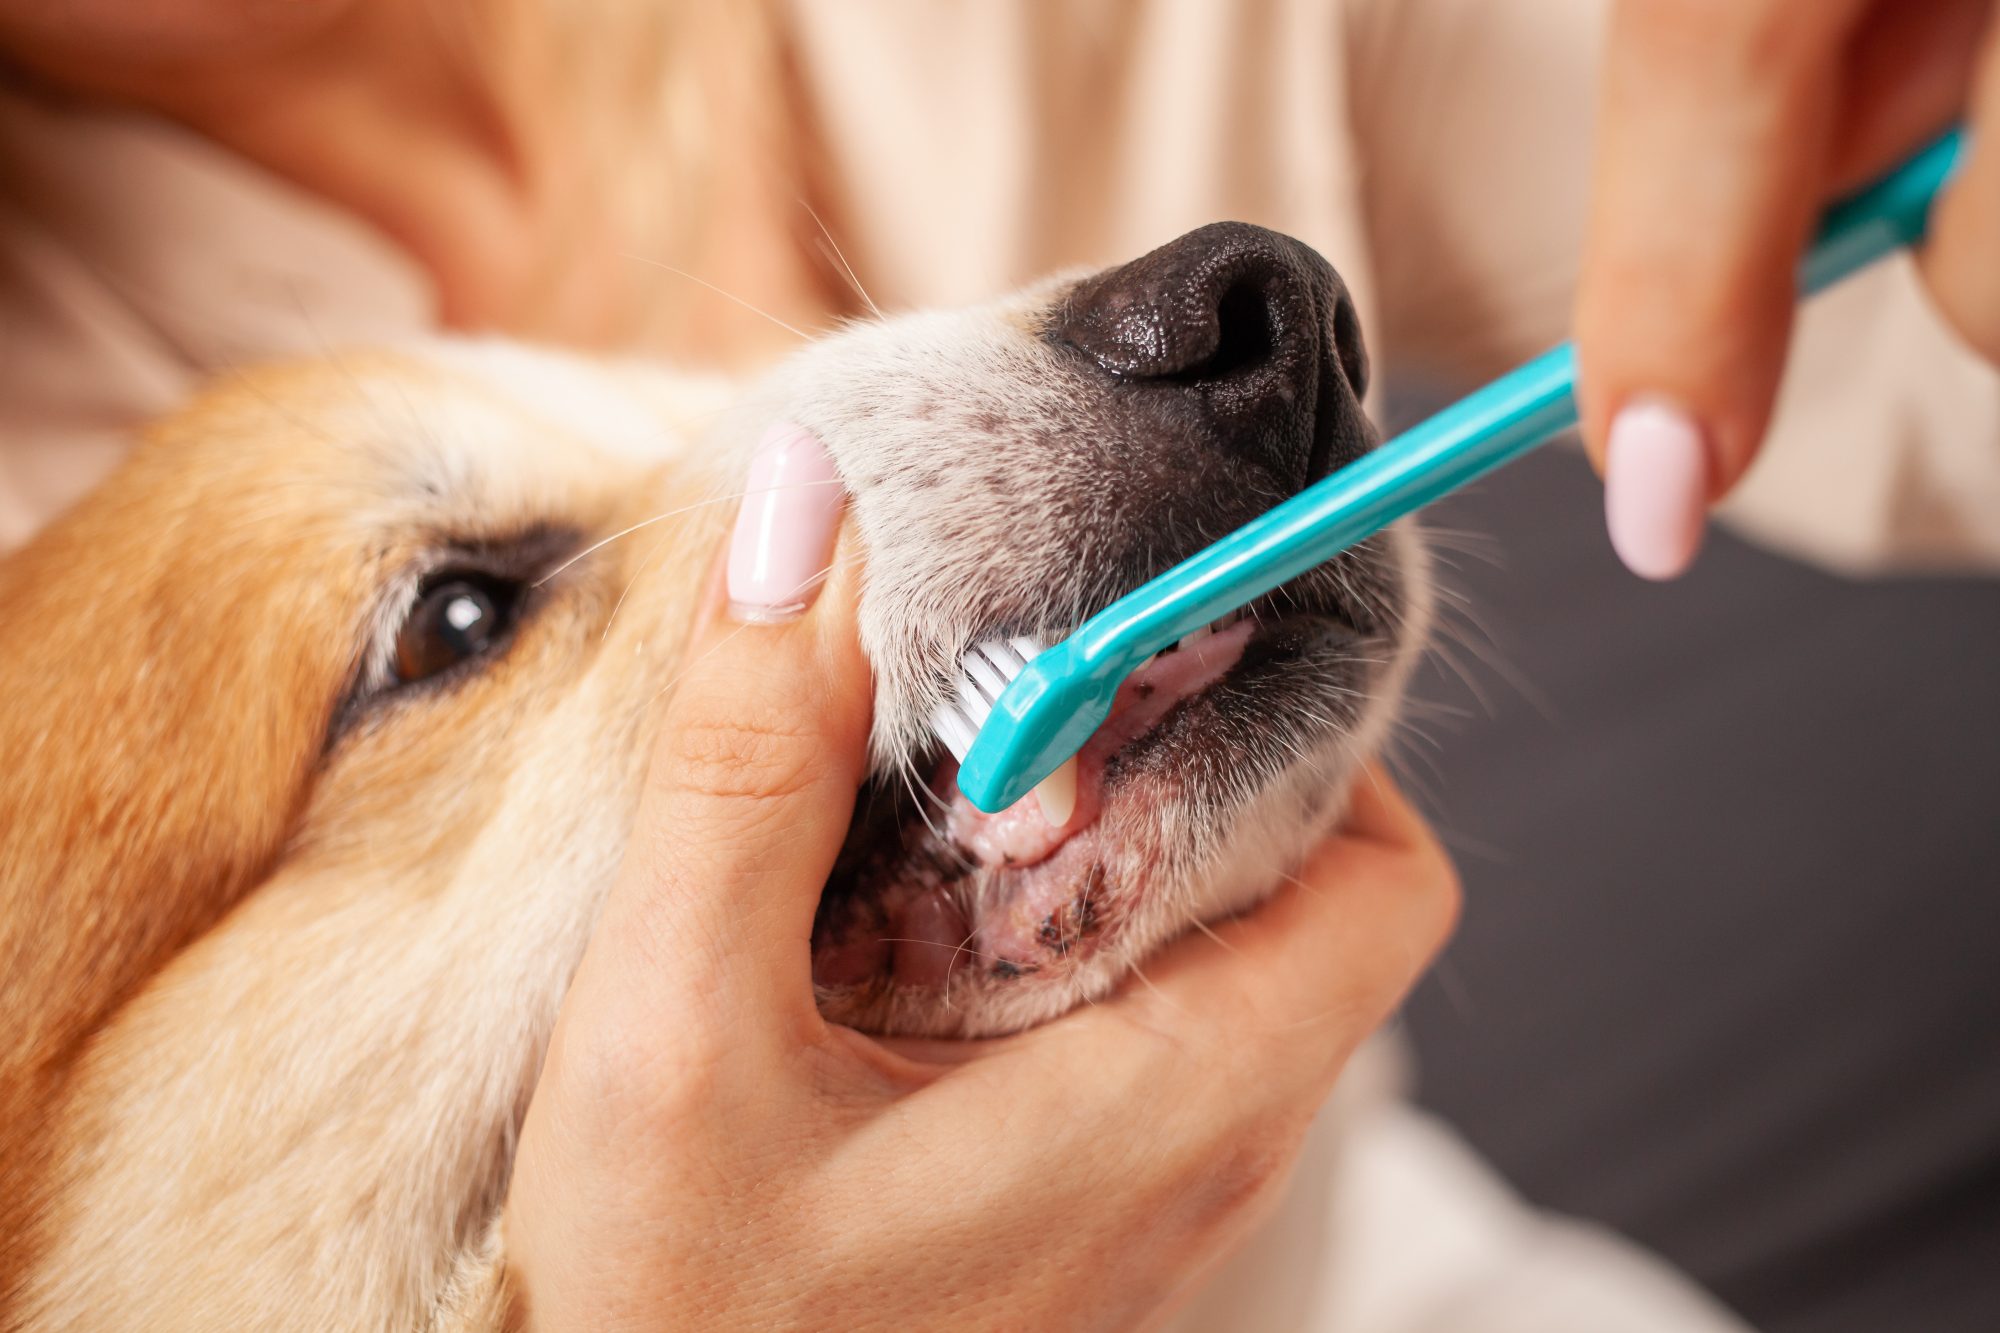 How Can I Keep My Dog’s Teeth Clean?